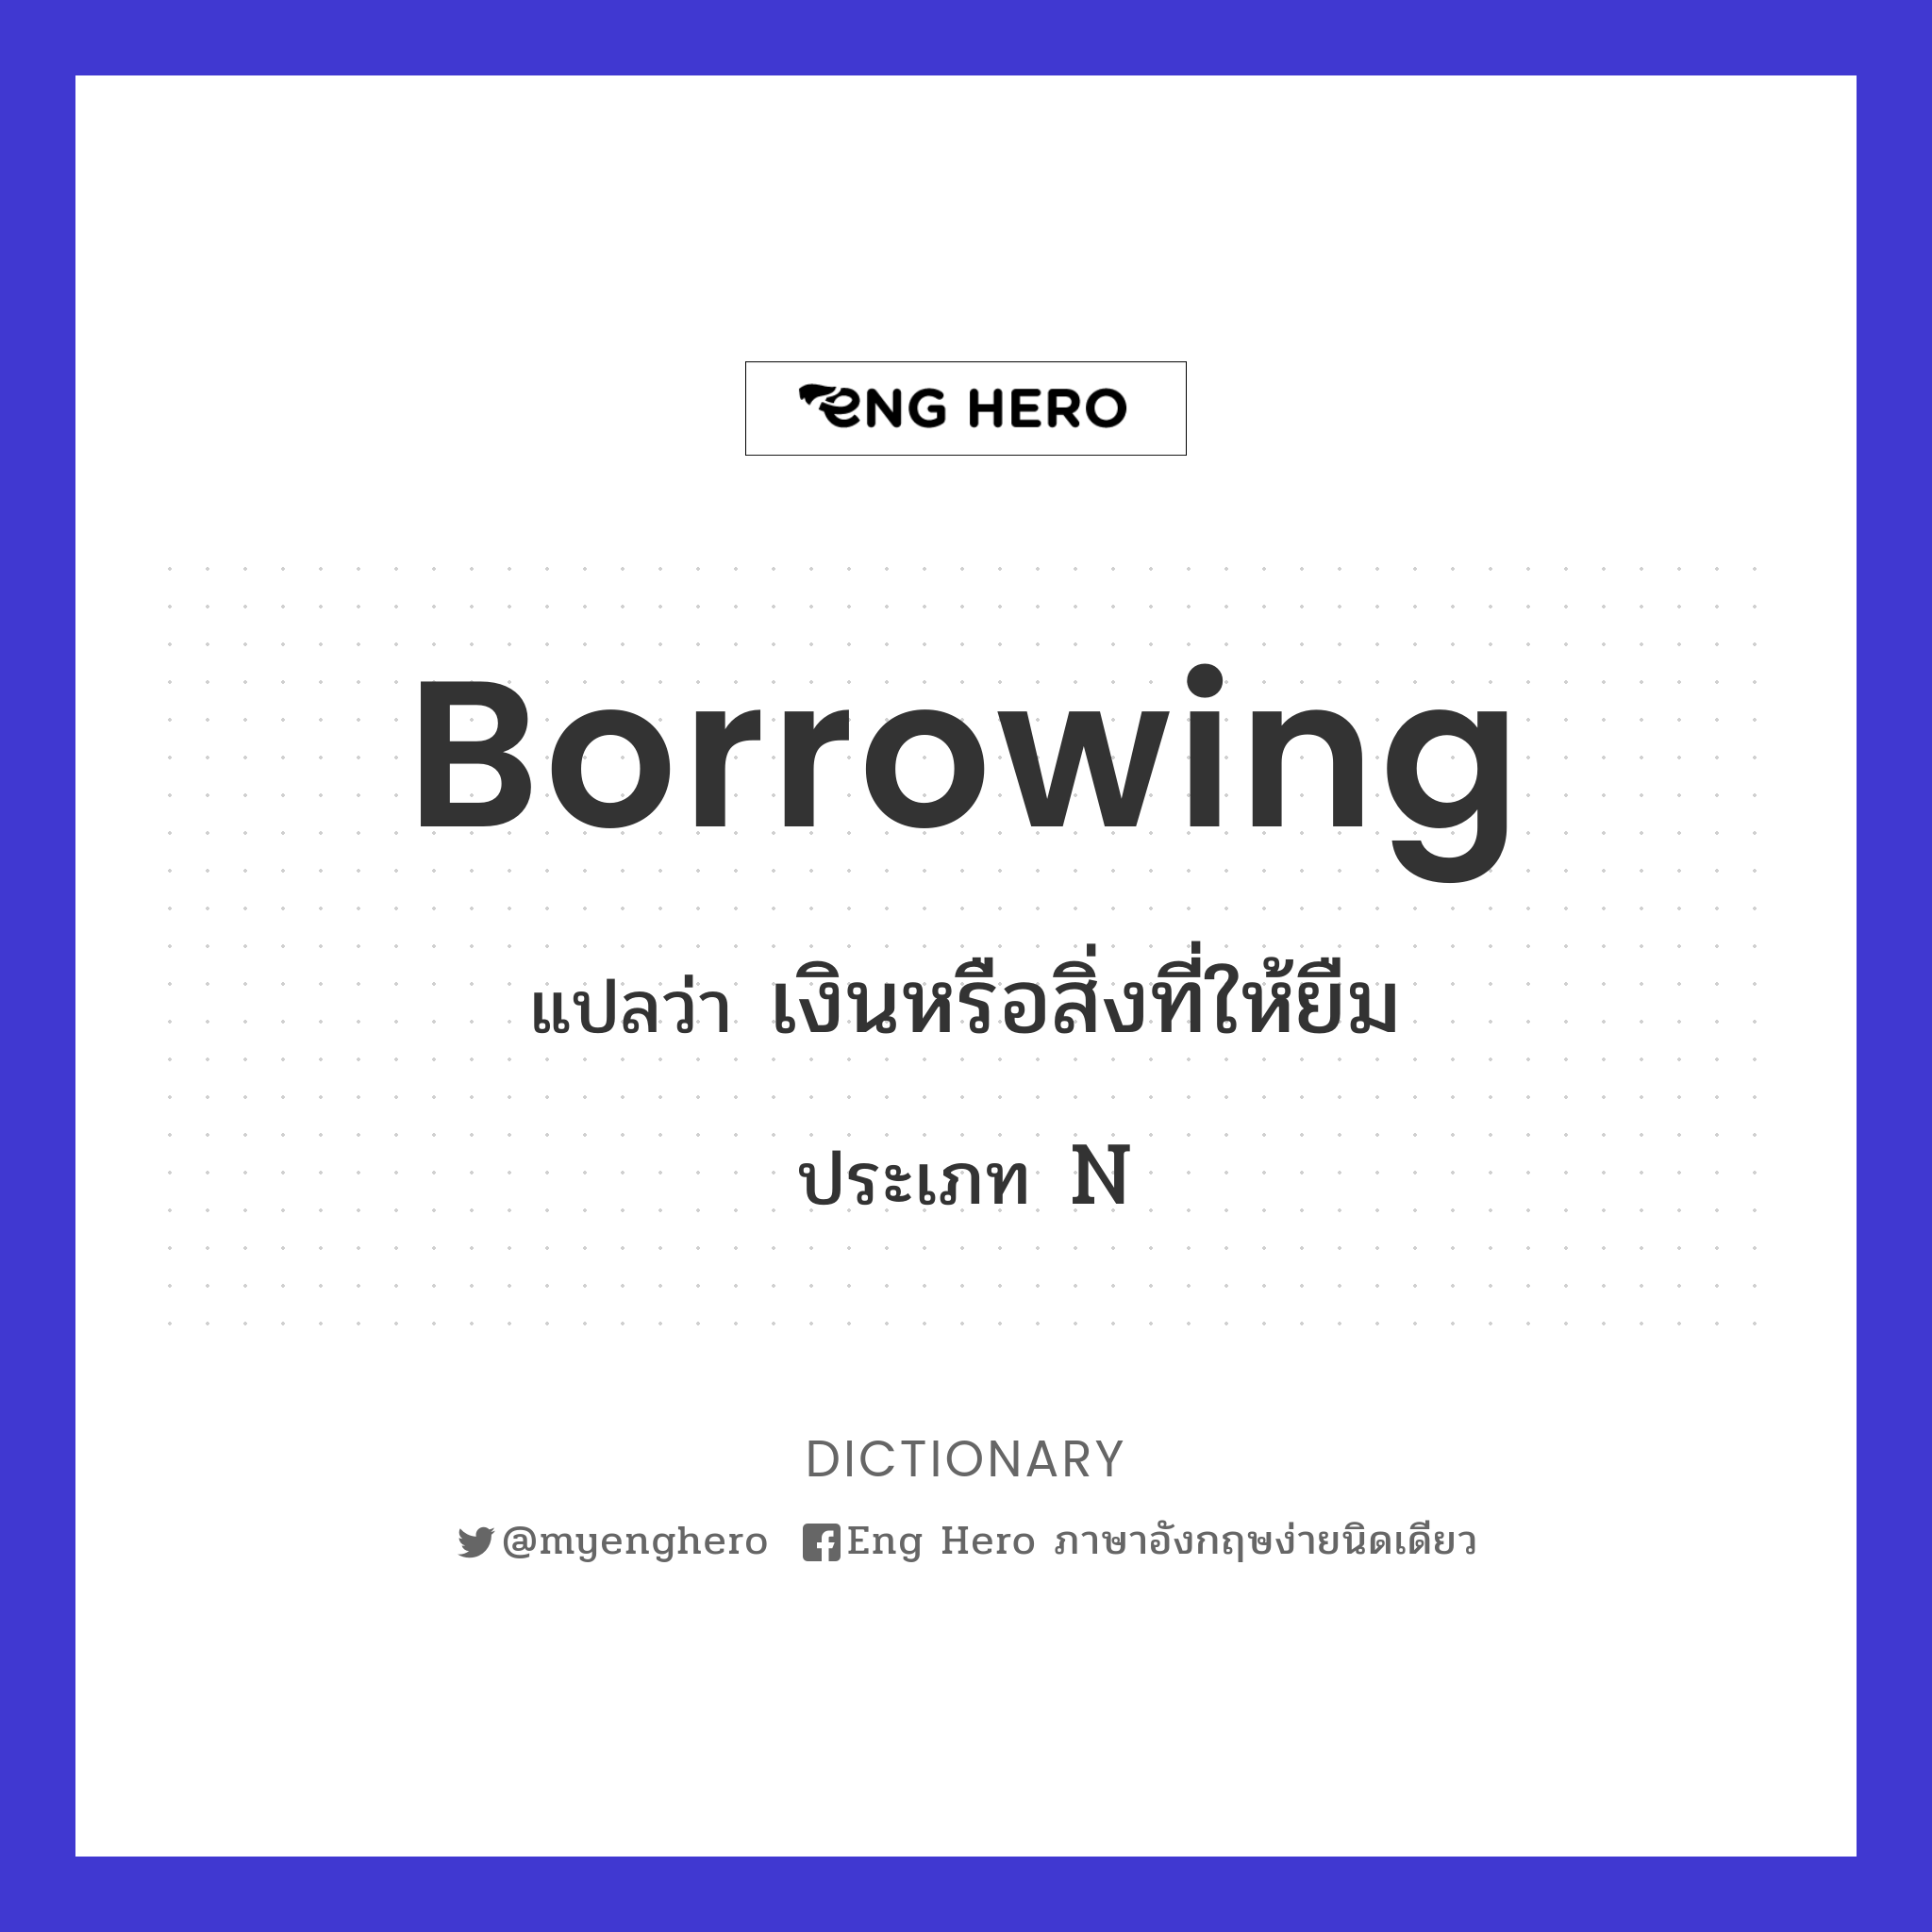 borrowing